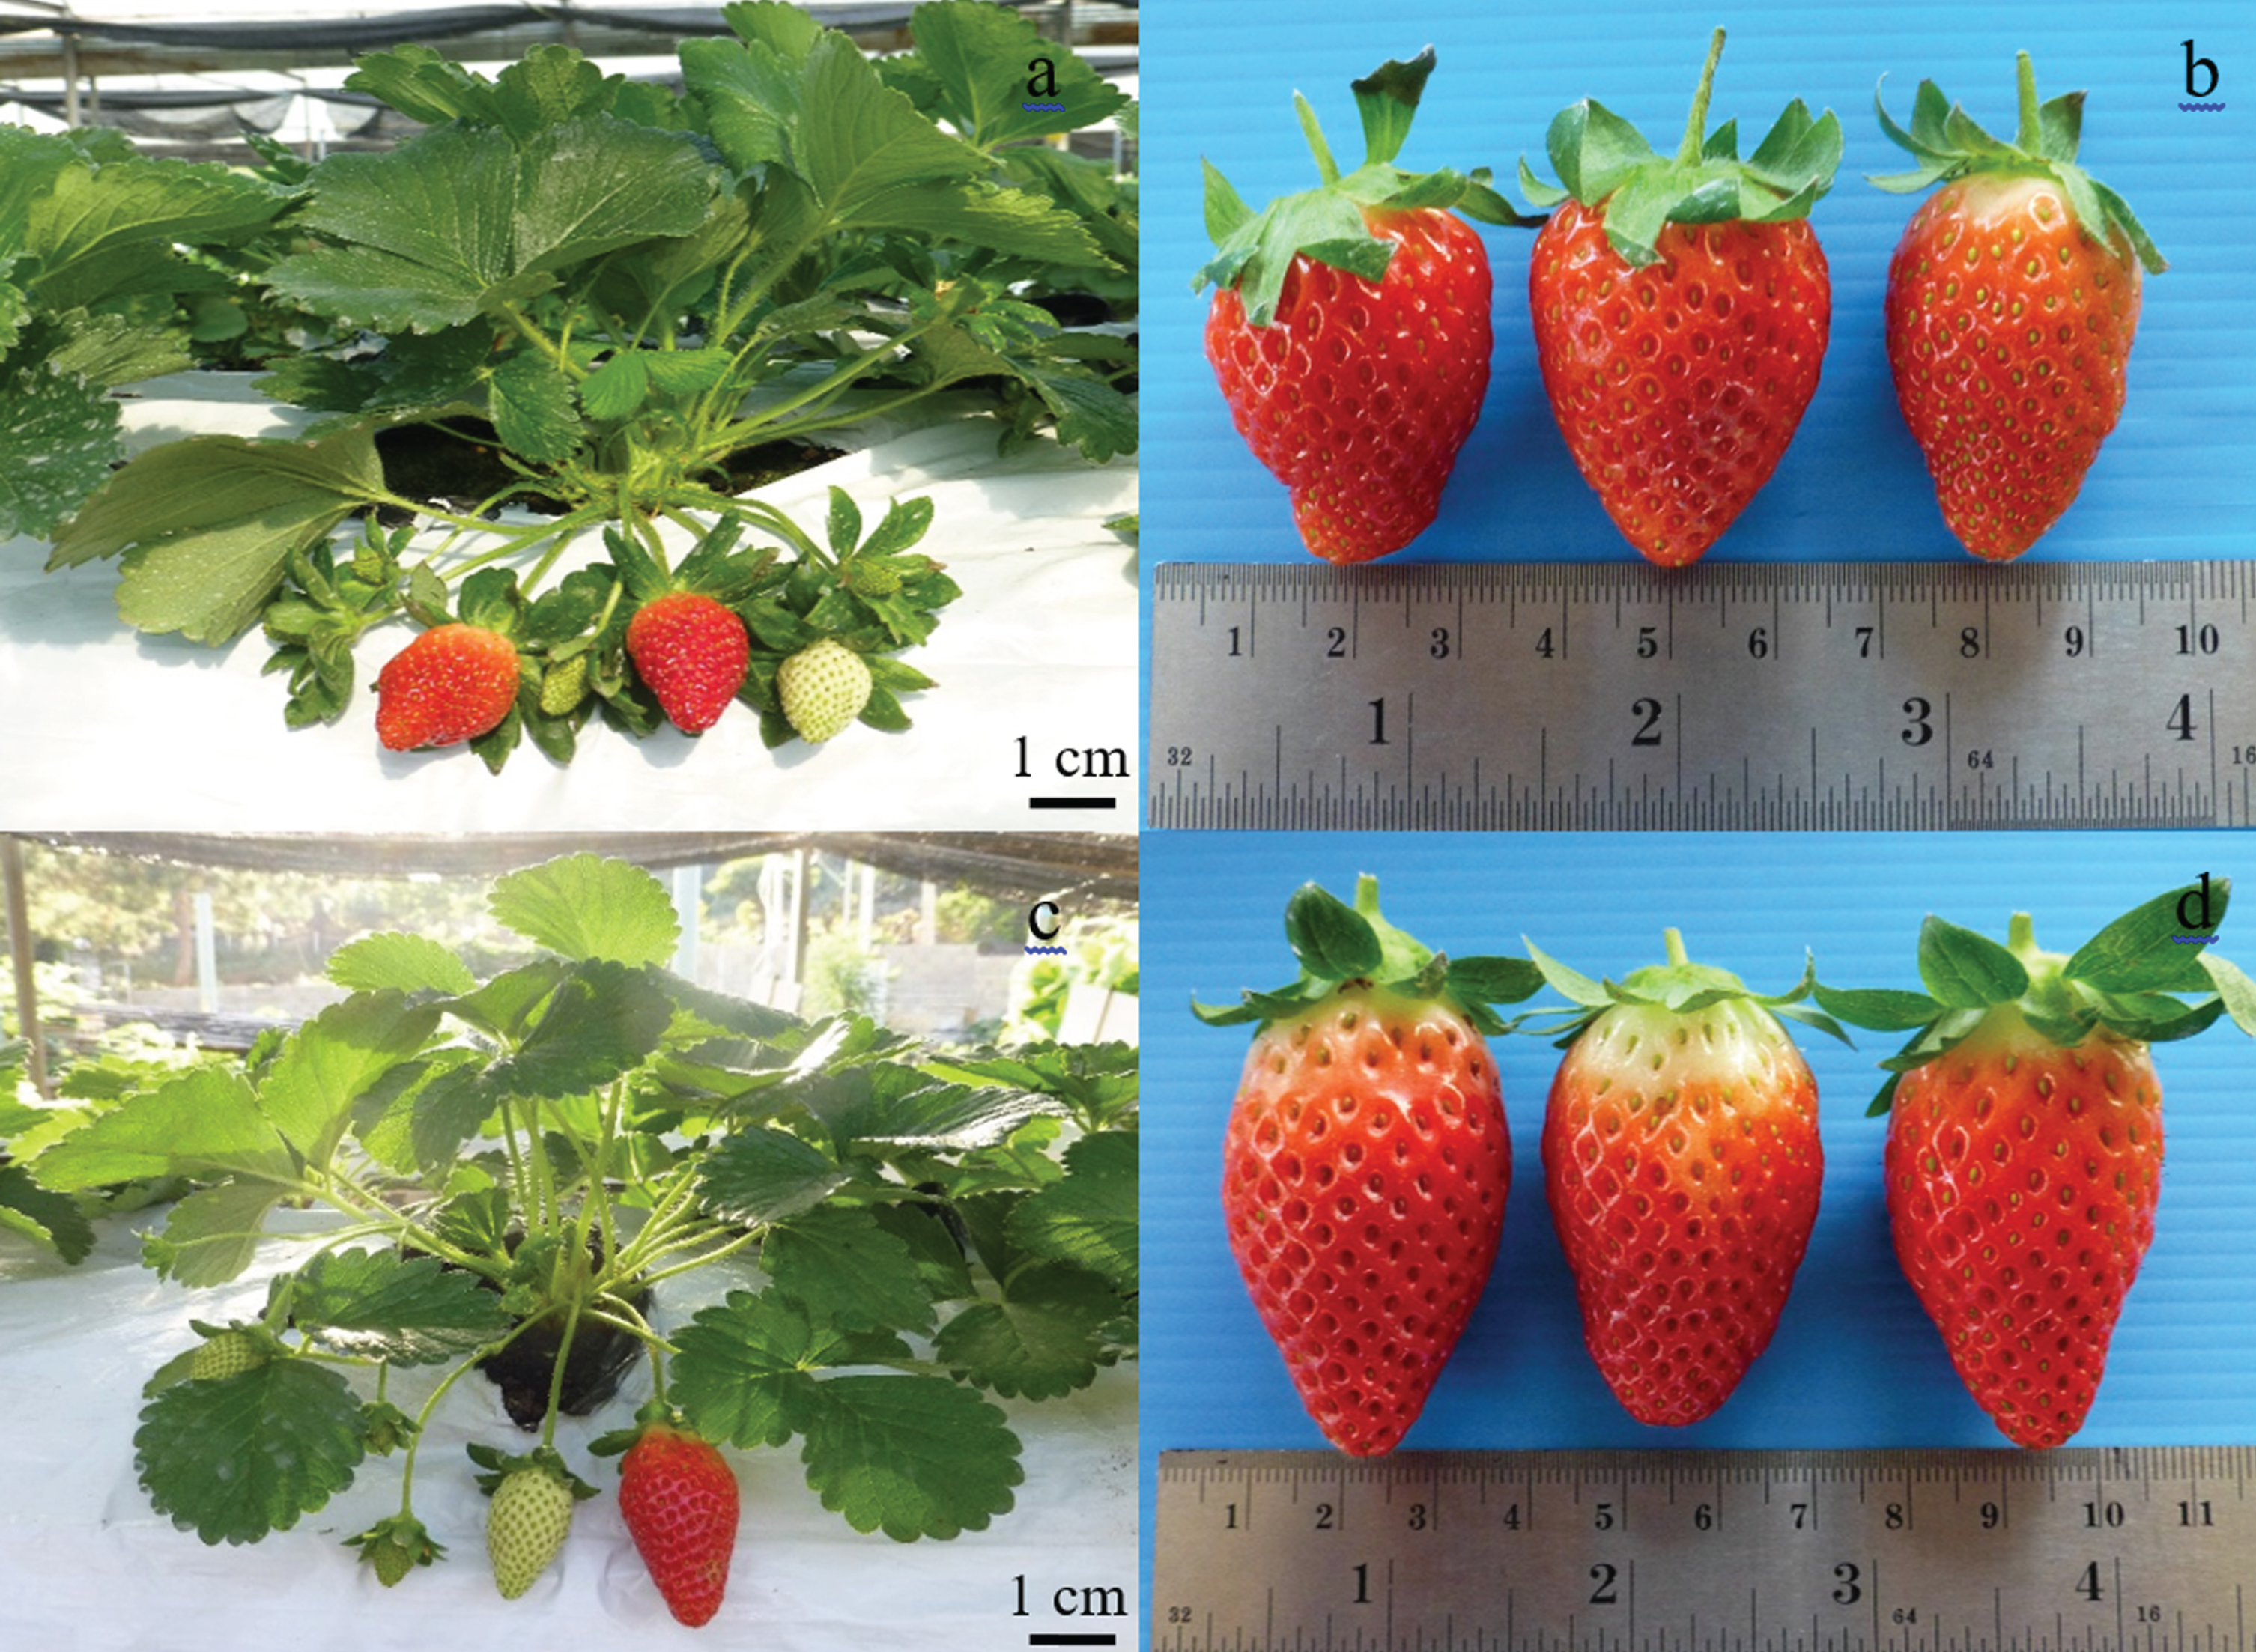 Morphological characteristics of plants and fruits of (a,b) hybrid No. 4 line 5; (c,d) hybrid No. 4 line 26.